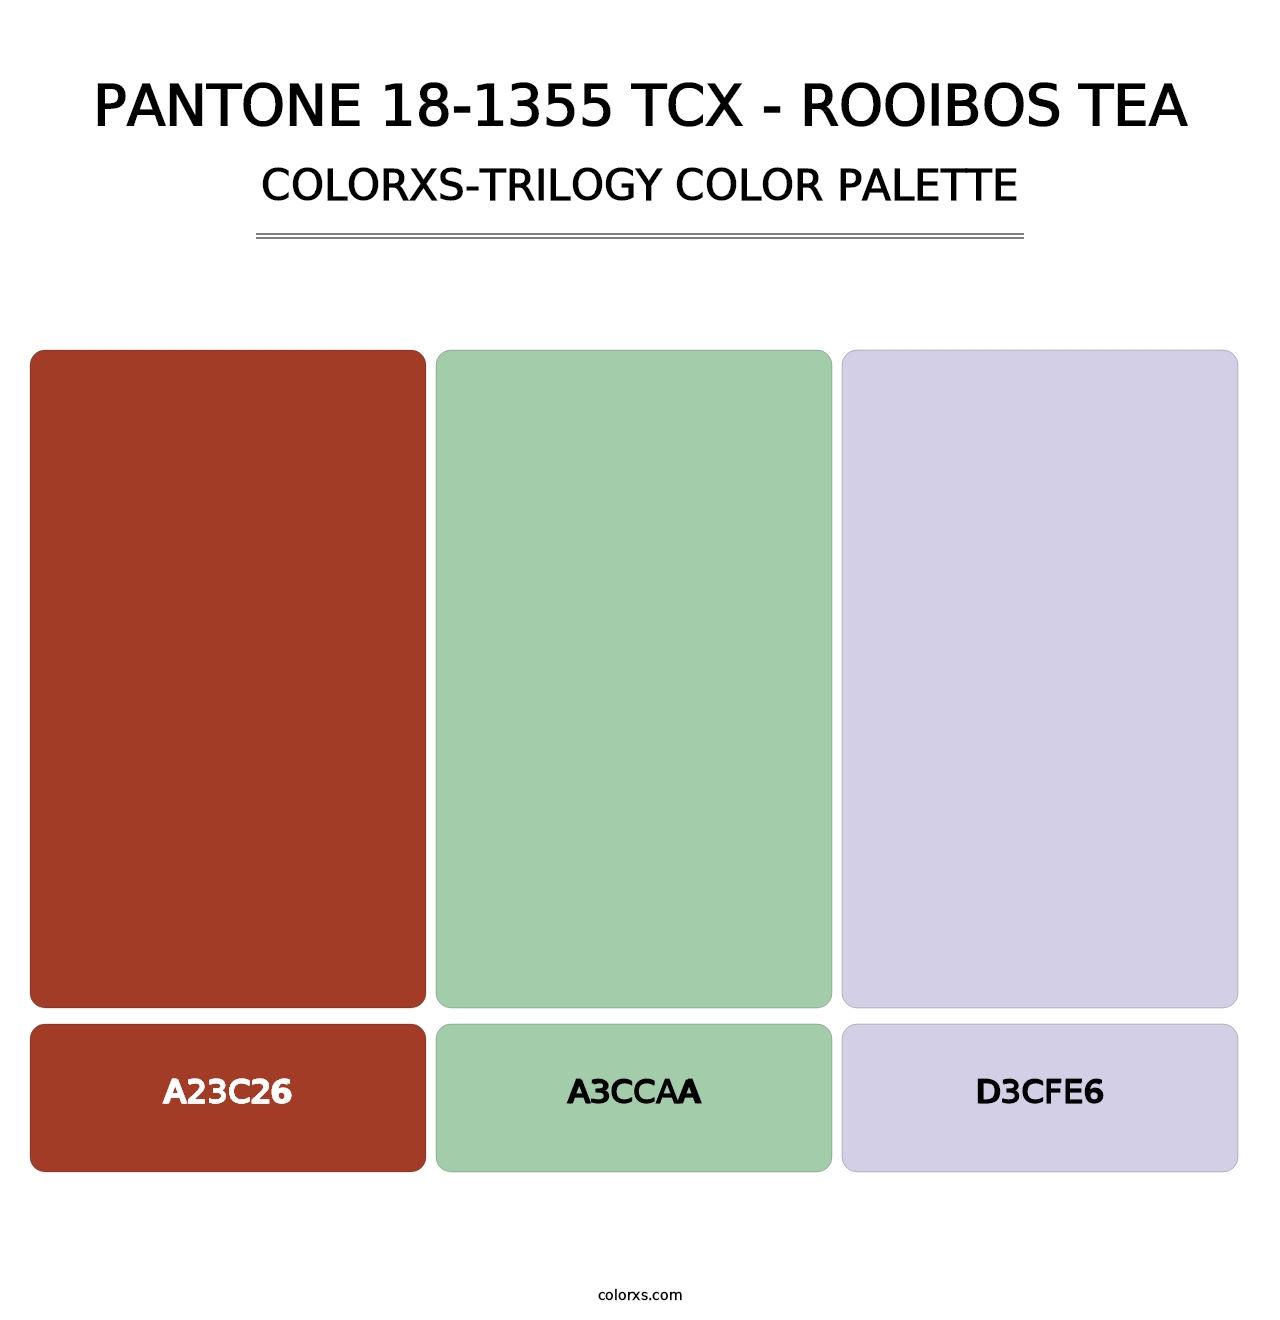 PANTONE 18-1355 TCX - Rooibos Tea - Colorxs Trilogy Palette